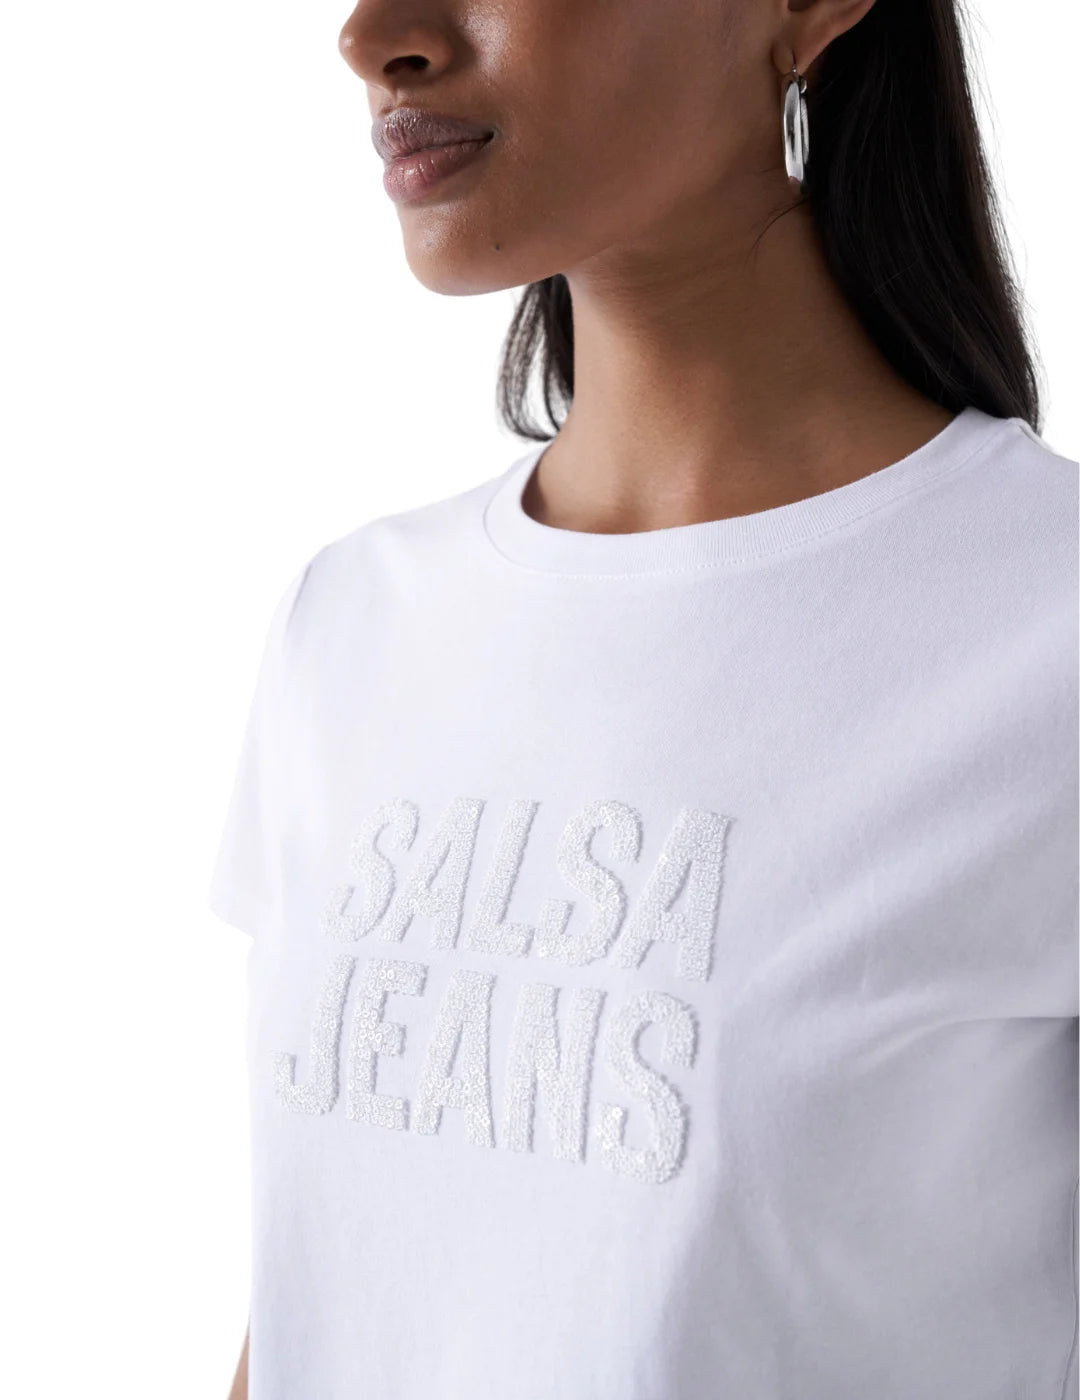 Camiseta Logo Cuentas Salsa Jeans Blanco | Bicos de Fío